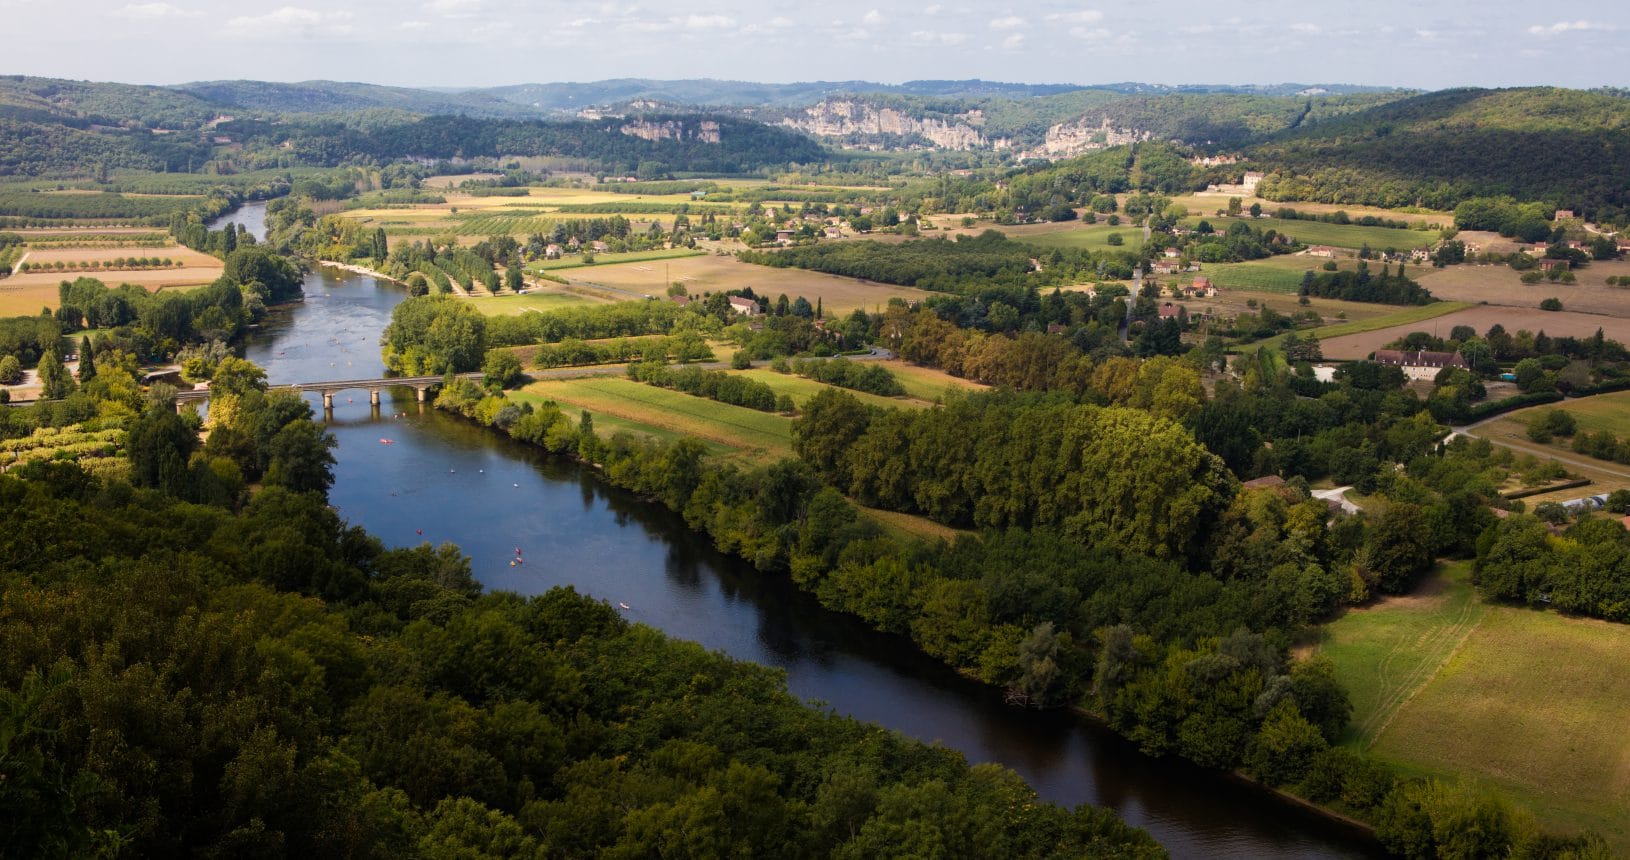 La vallée de la Dordogne vue du ciel